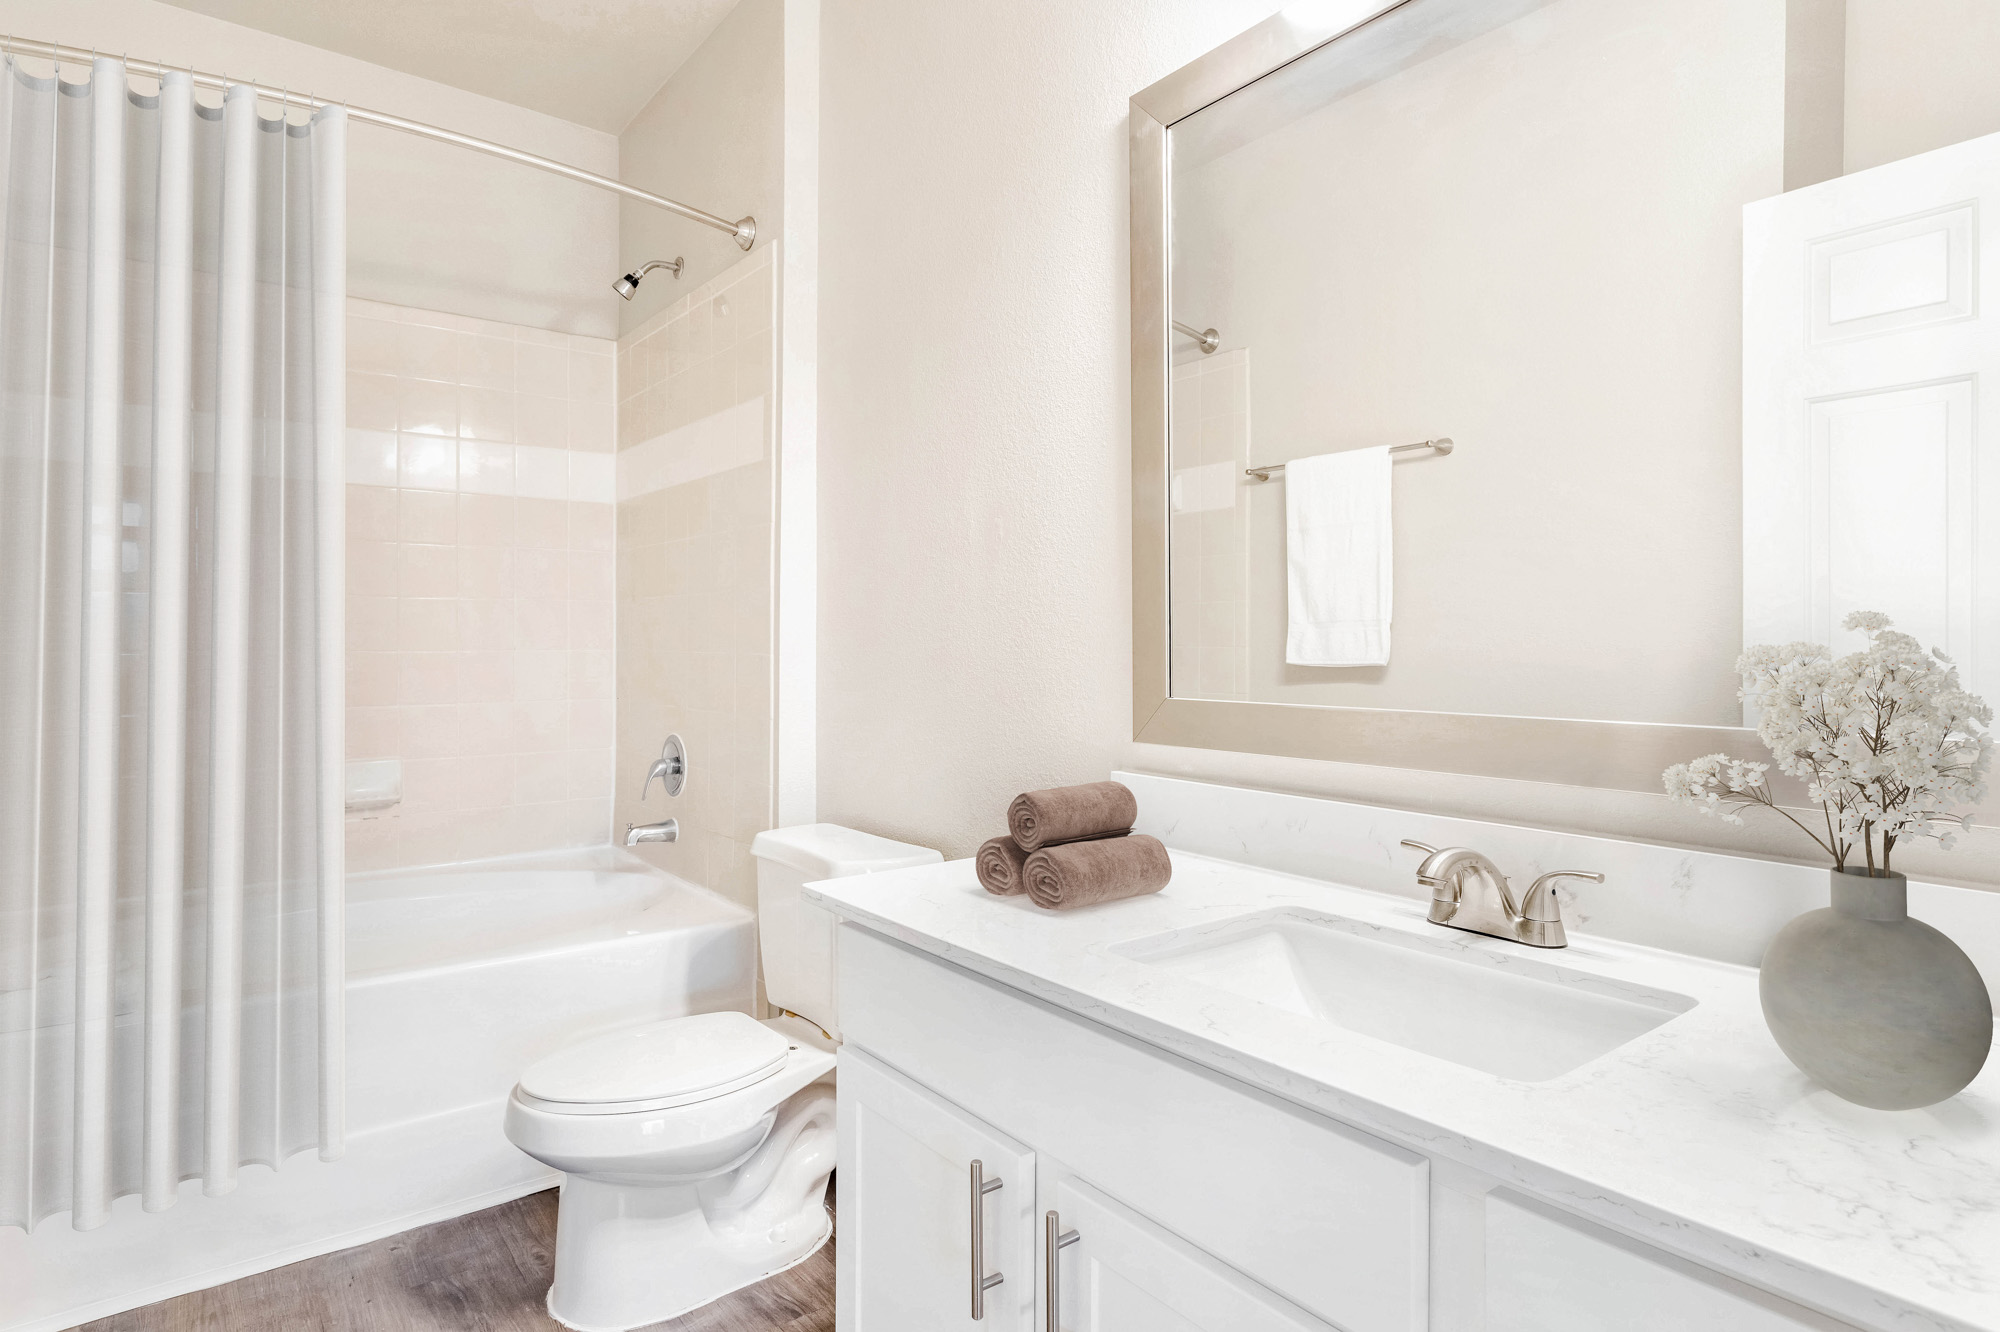 A bathroom at The Villas at Shadow Creek apartments in Houston, TX.